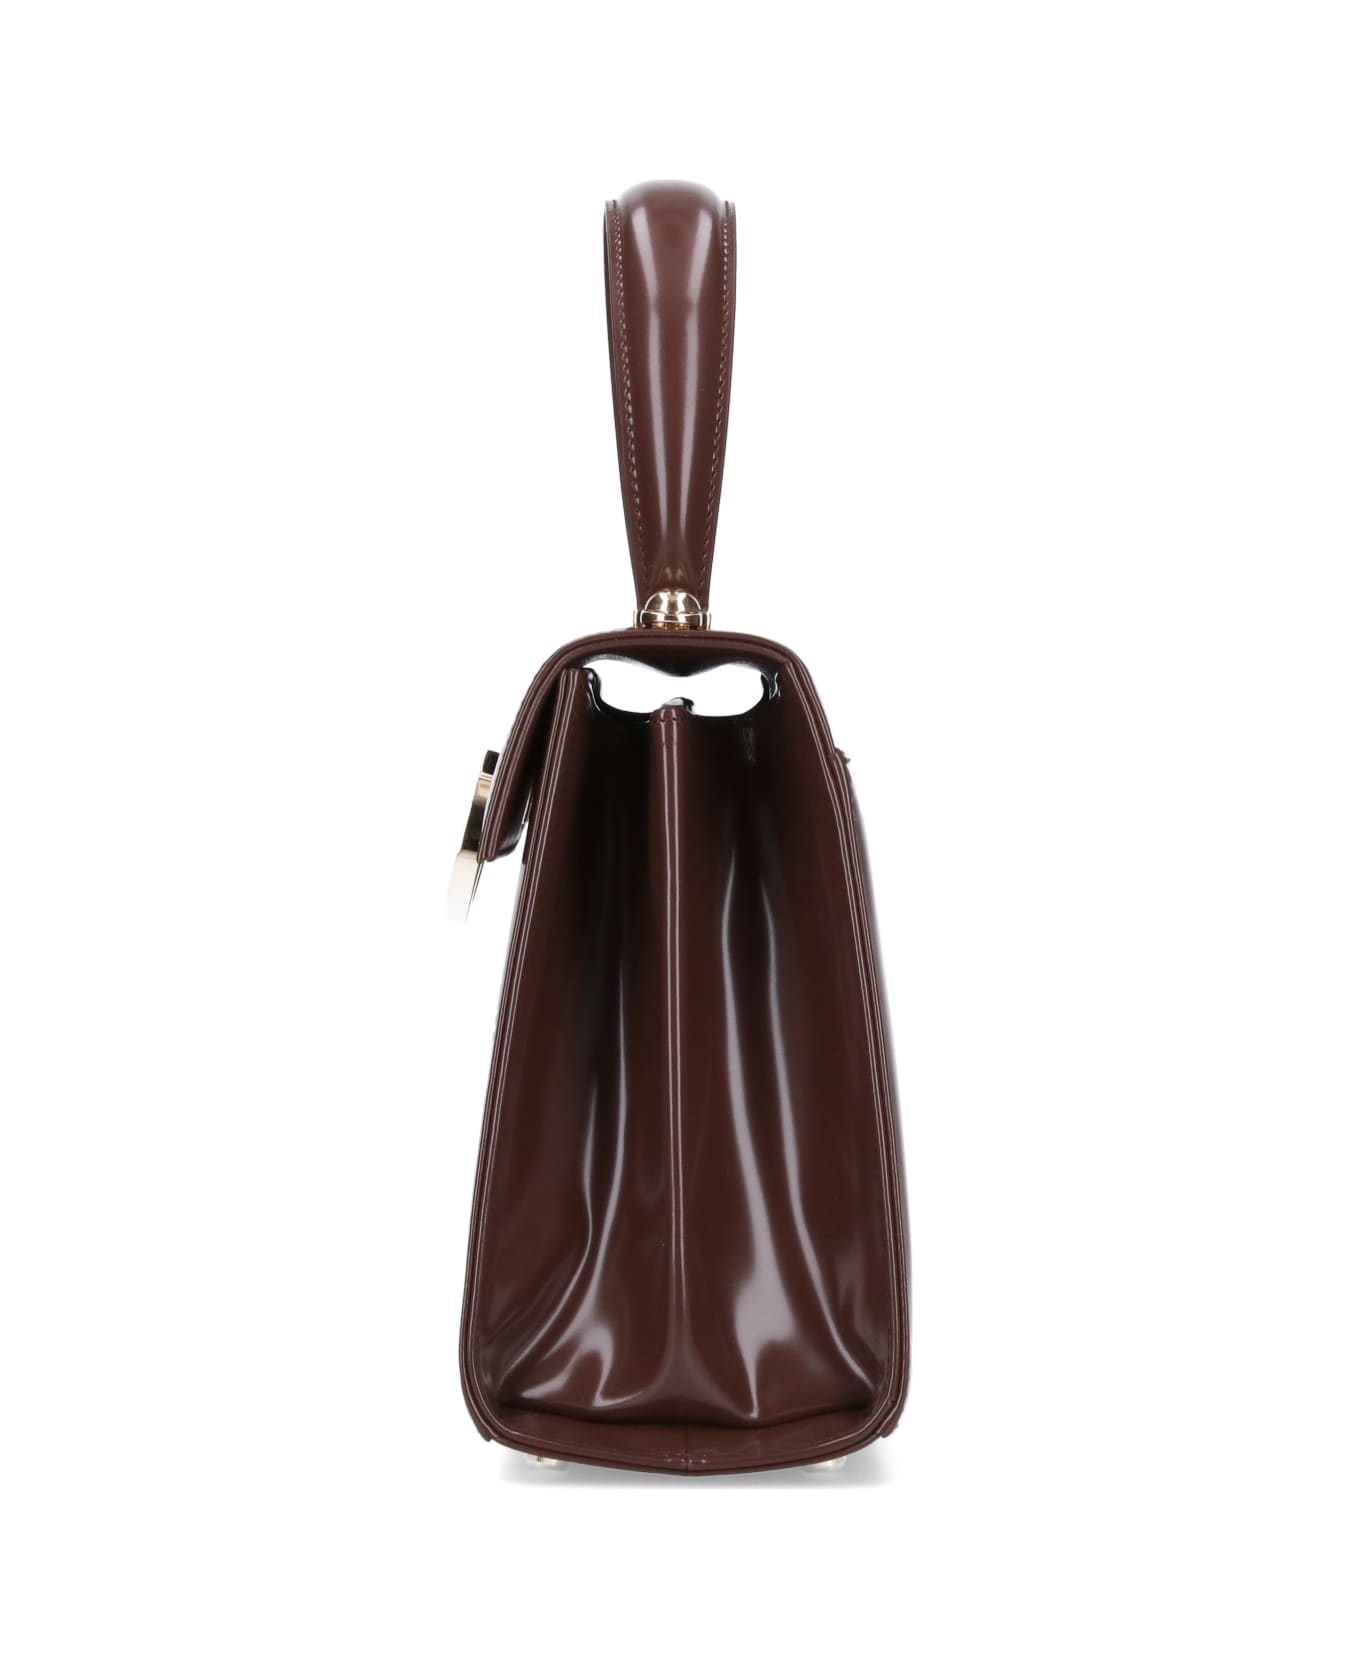 Ferragamo "iconic S" Handbag - Brown